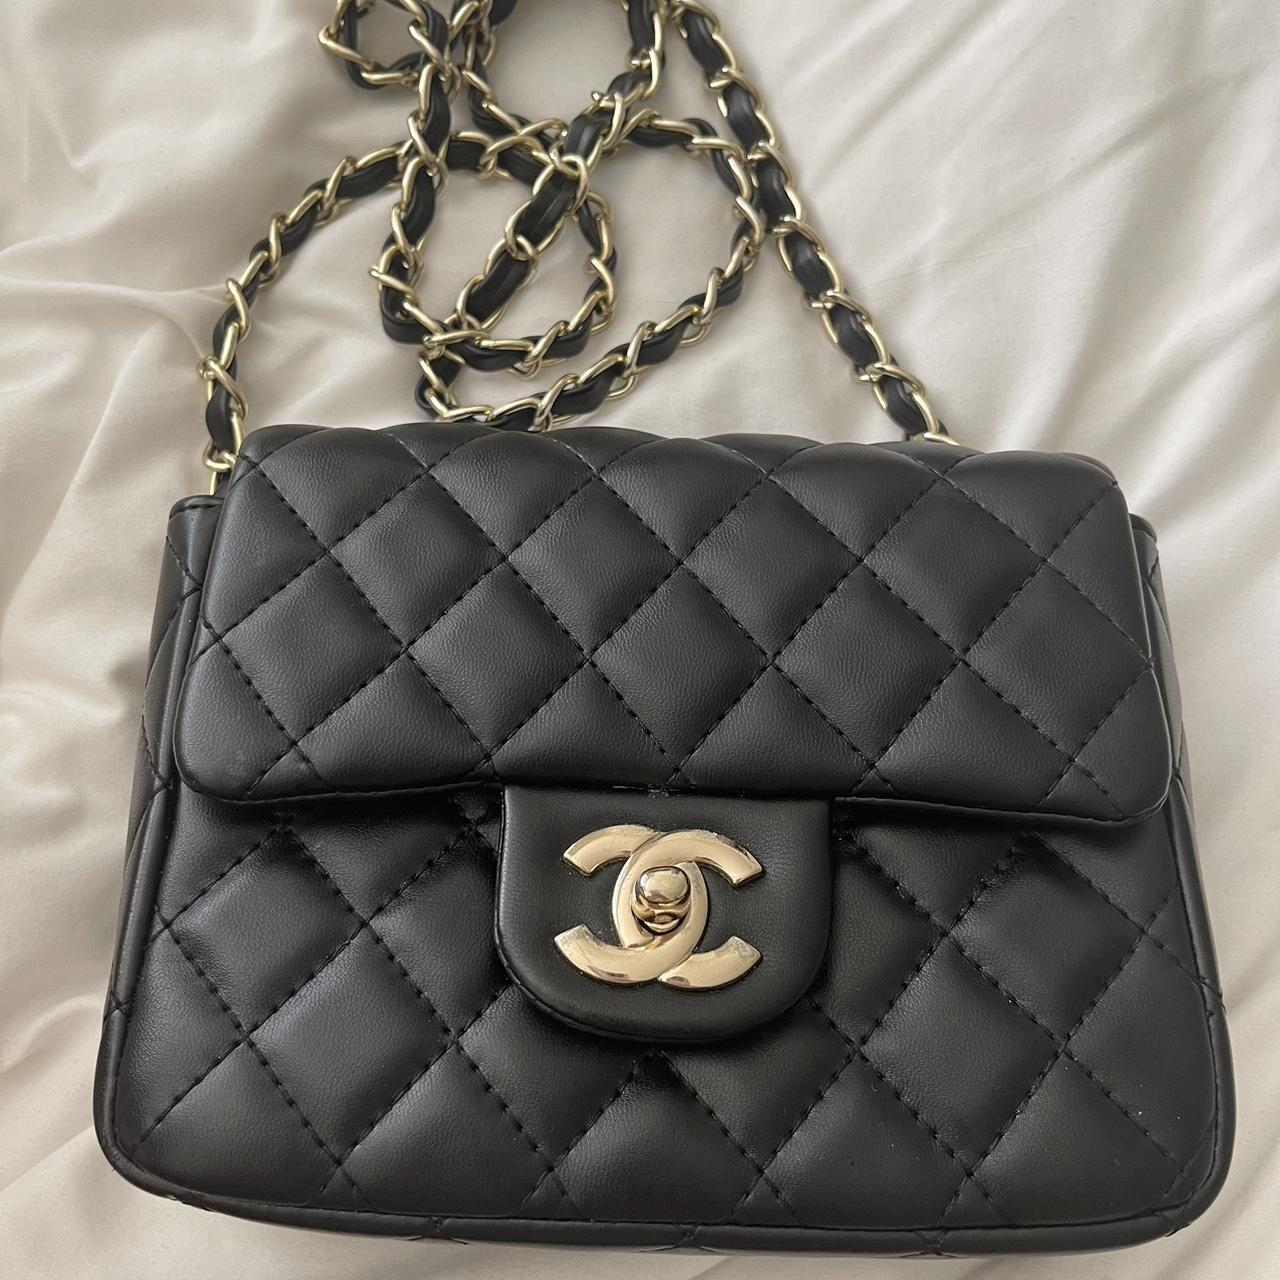 Authentic Chanel handbag Super cute small size but - Depop